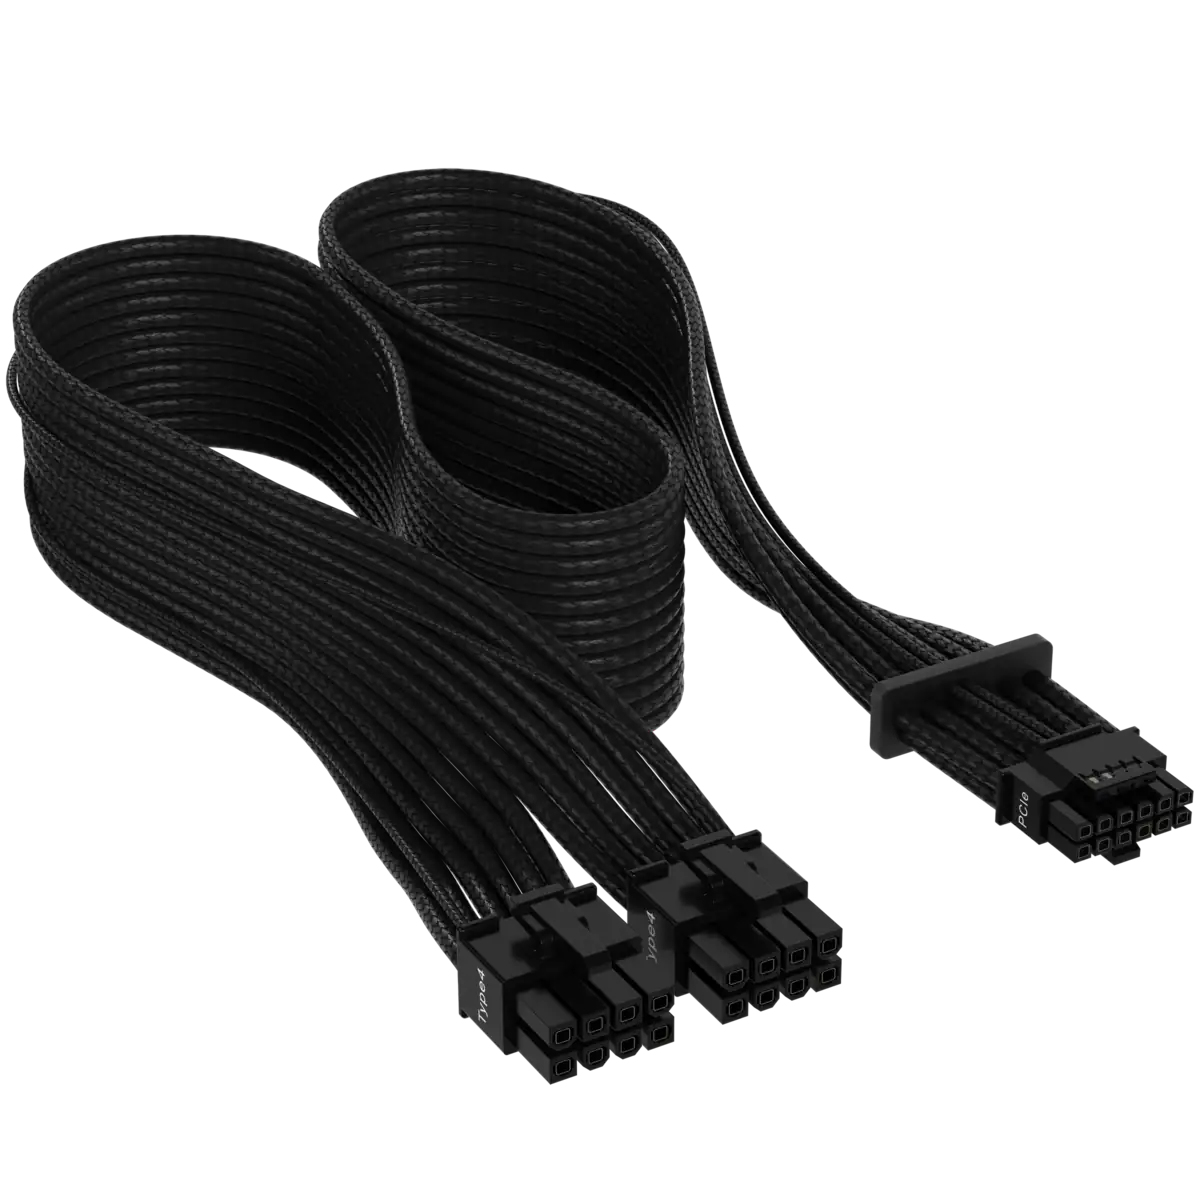 Photos - Cable (video, audio, USB) Corsair CP-8920331 internal power cable 